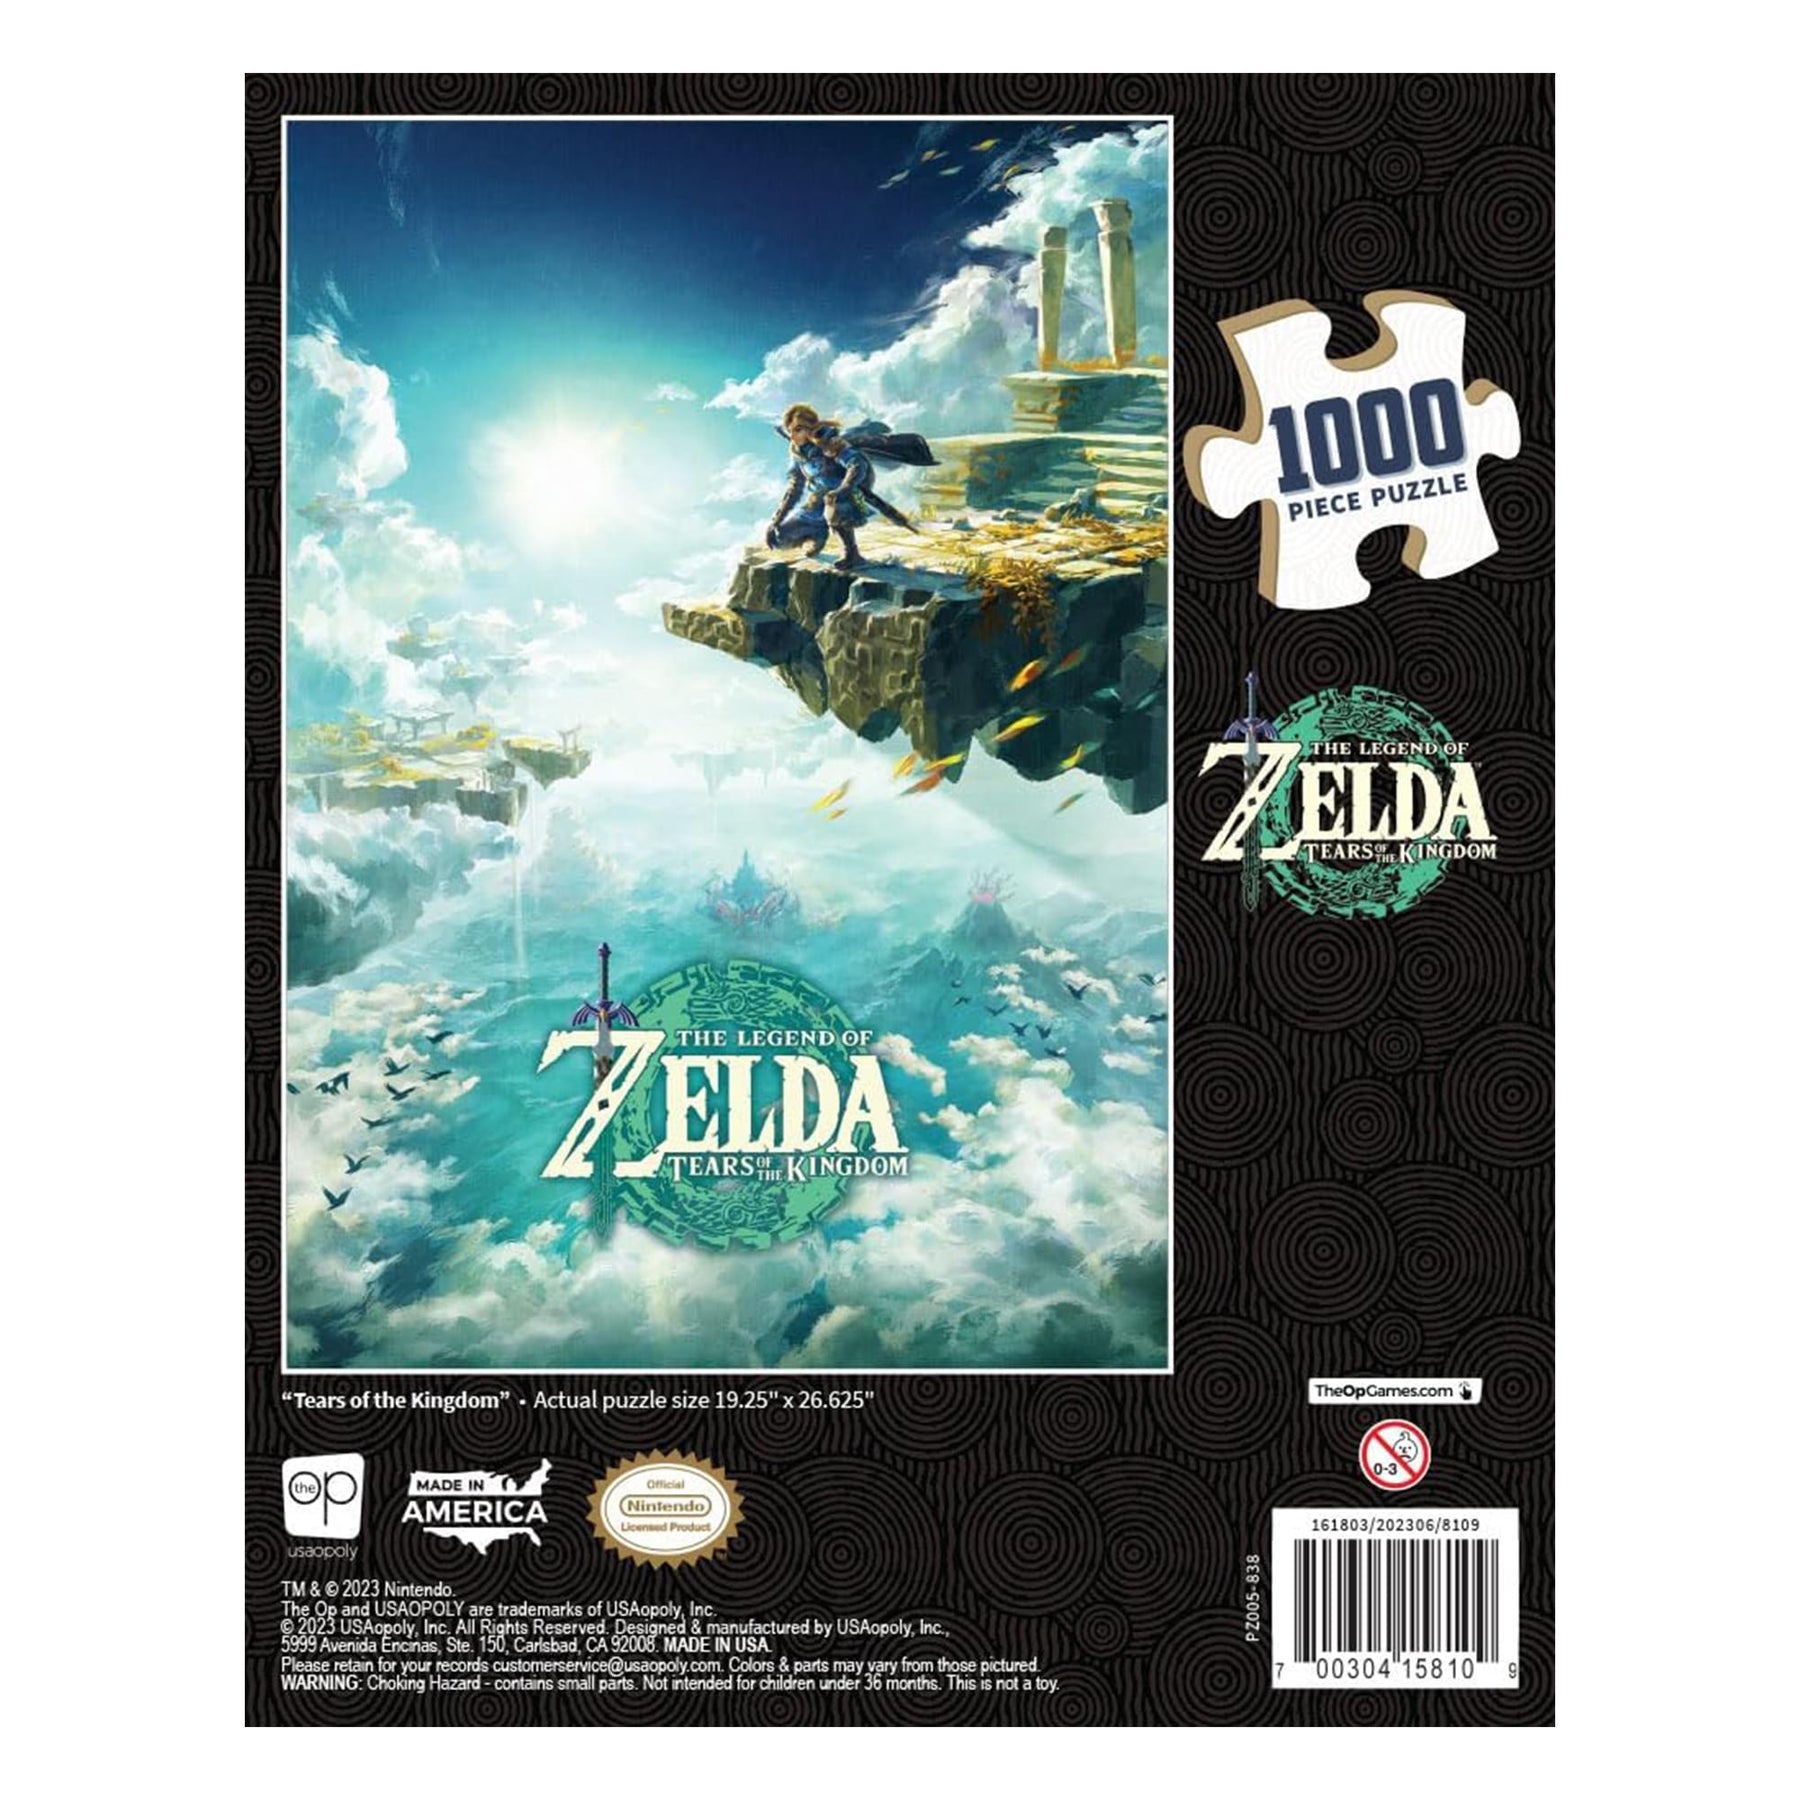 The Legend of Zelda "Tears of The Kingdom" 1000 Piece Jigsaw Puzzle